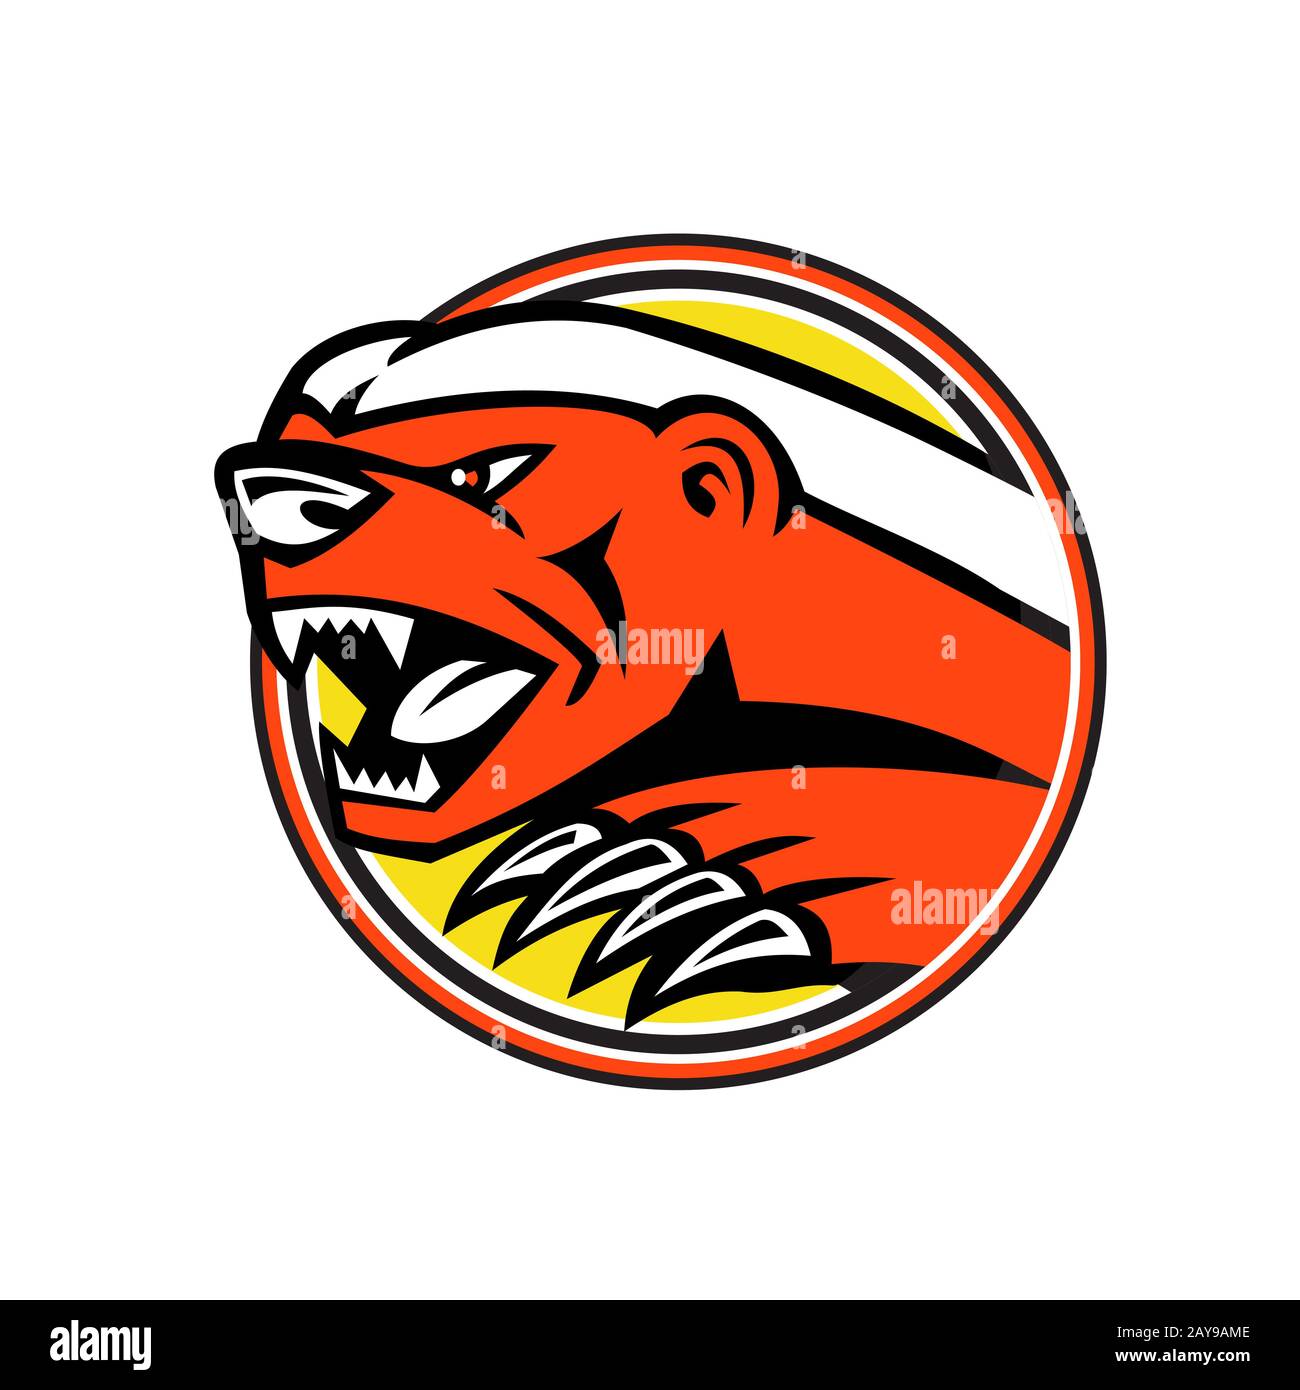 Angry Honey Badger Mascot Stock Photo